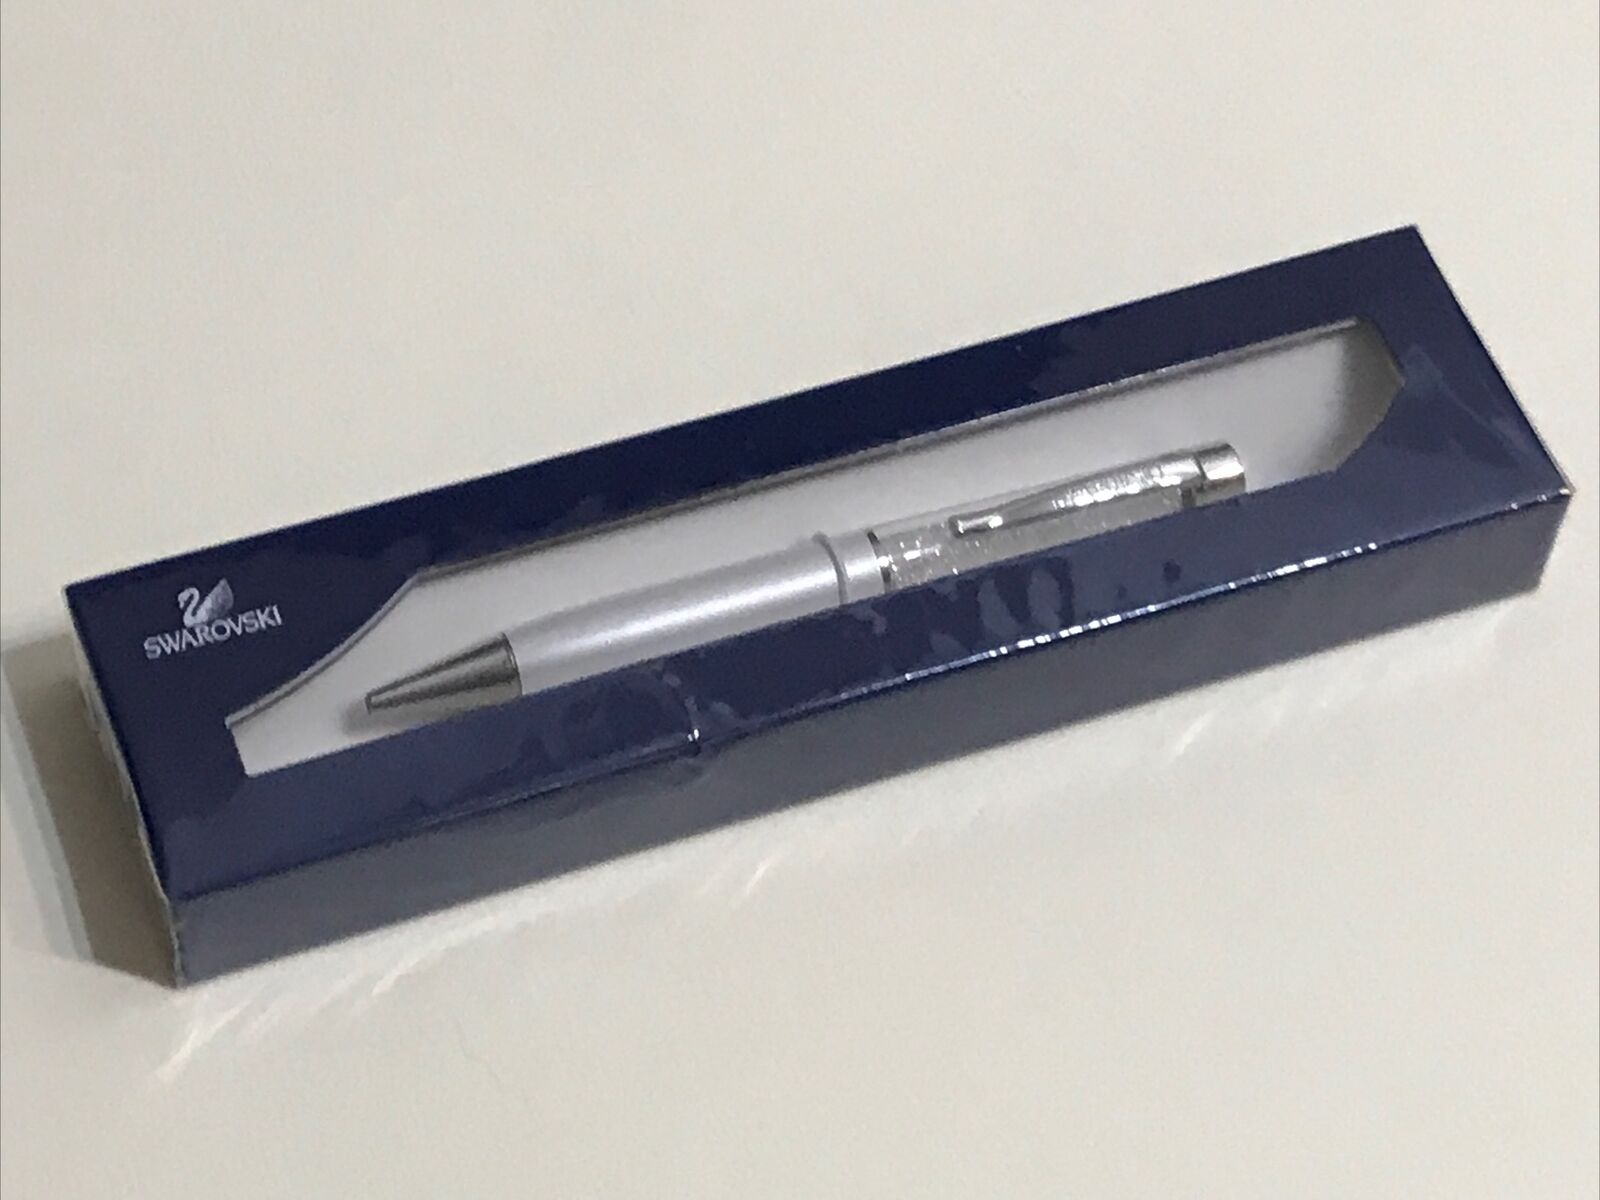 Swarovski Crystalline Ballpoint Pen, White Pearl (1053537) Mint In Box.